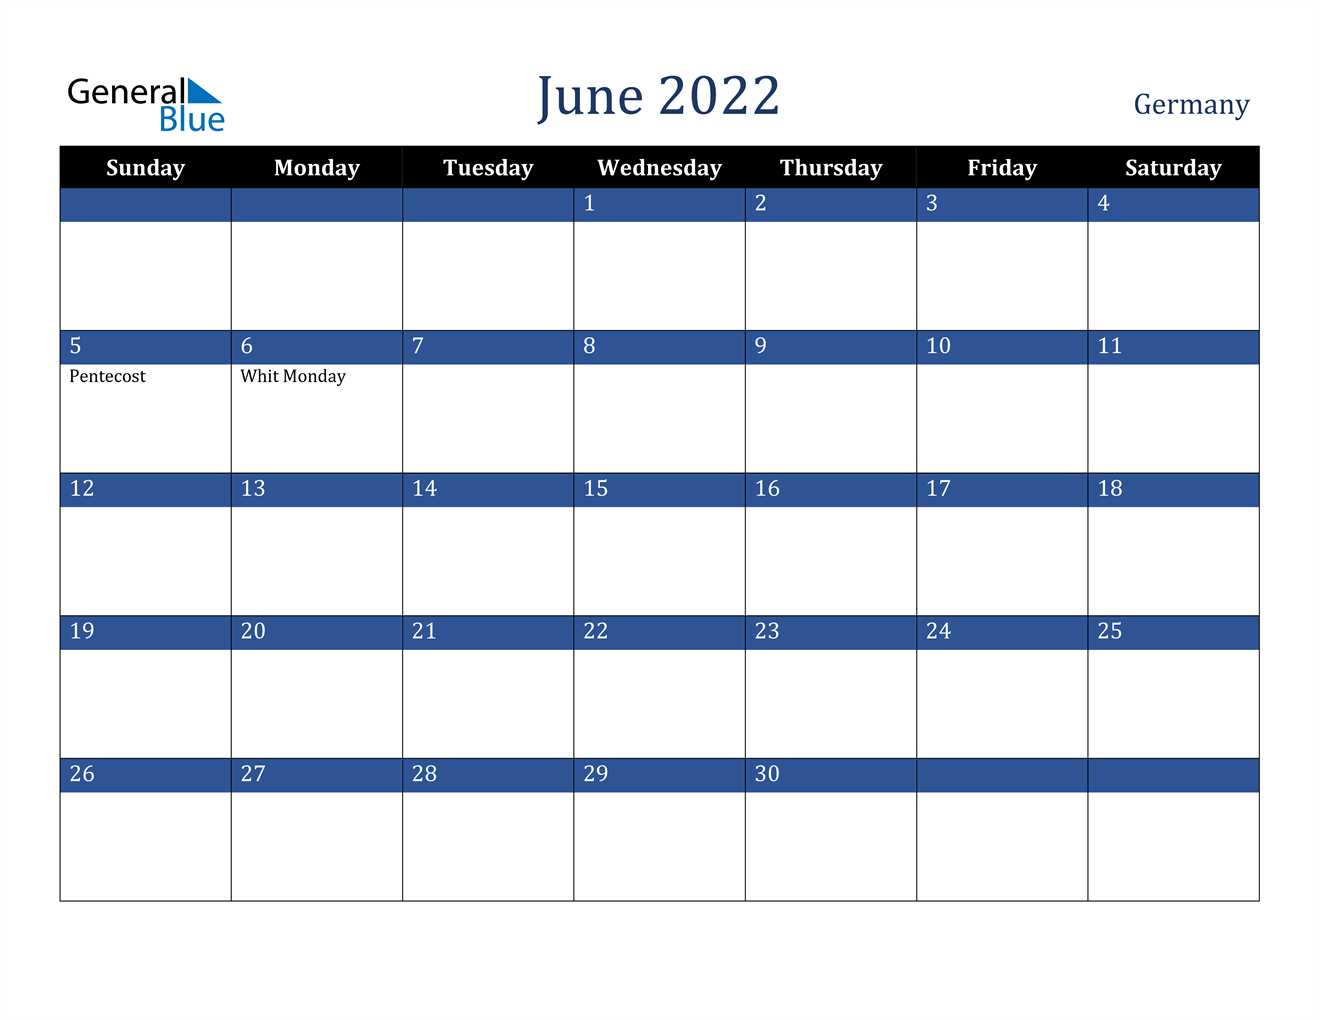 June 2022 Calendar - Germany